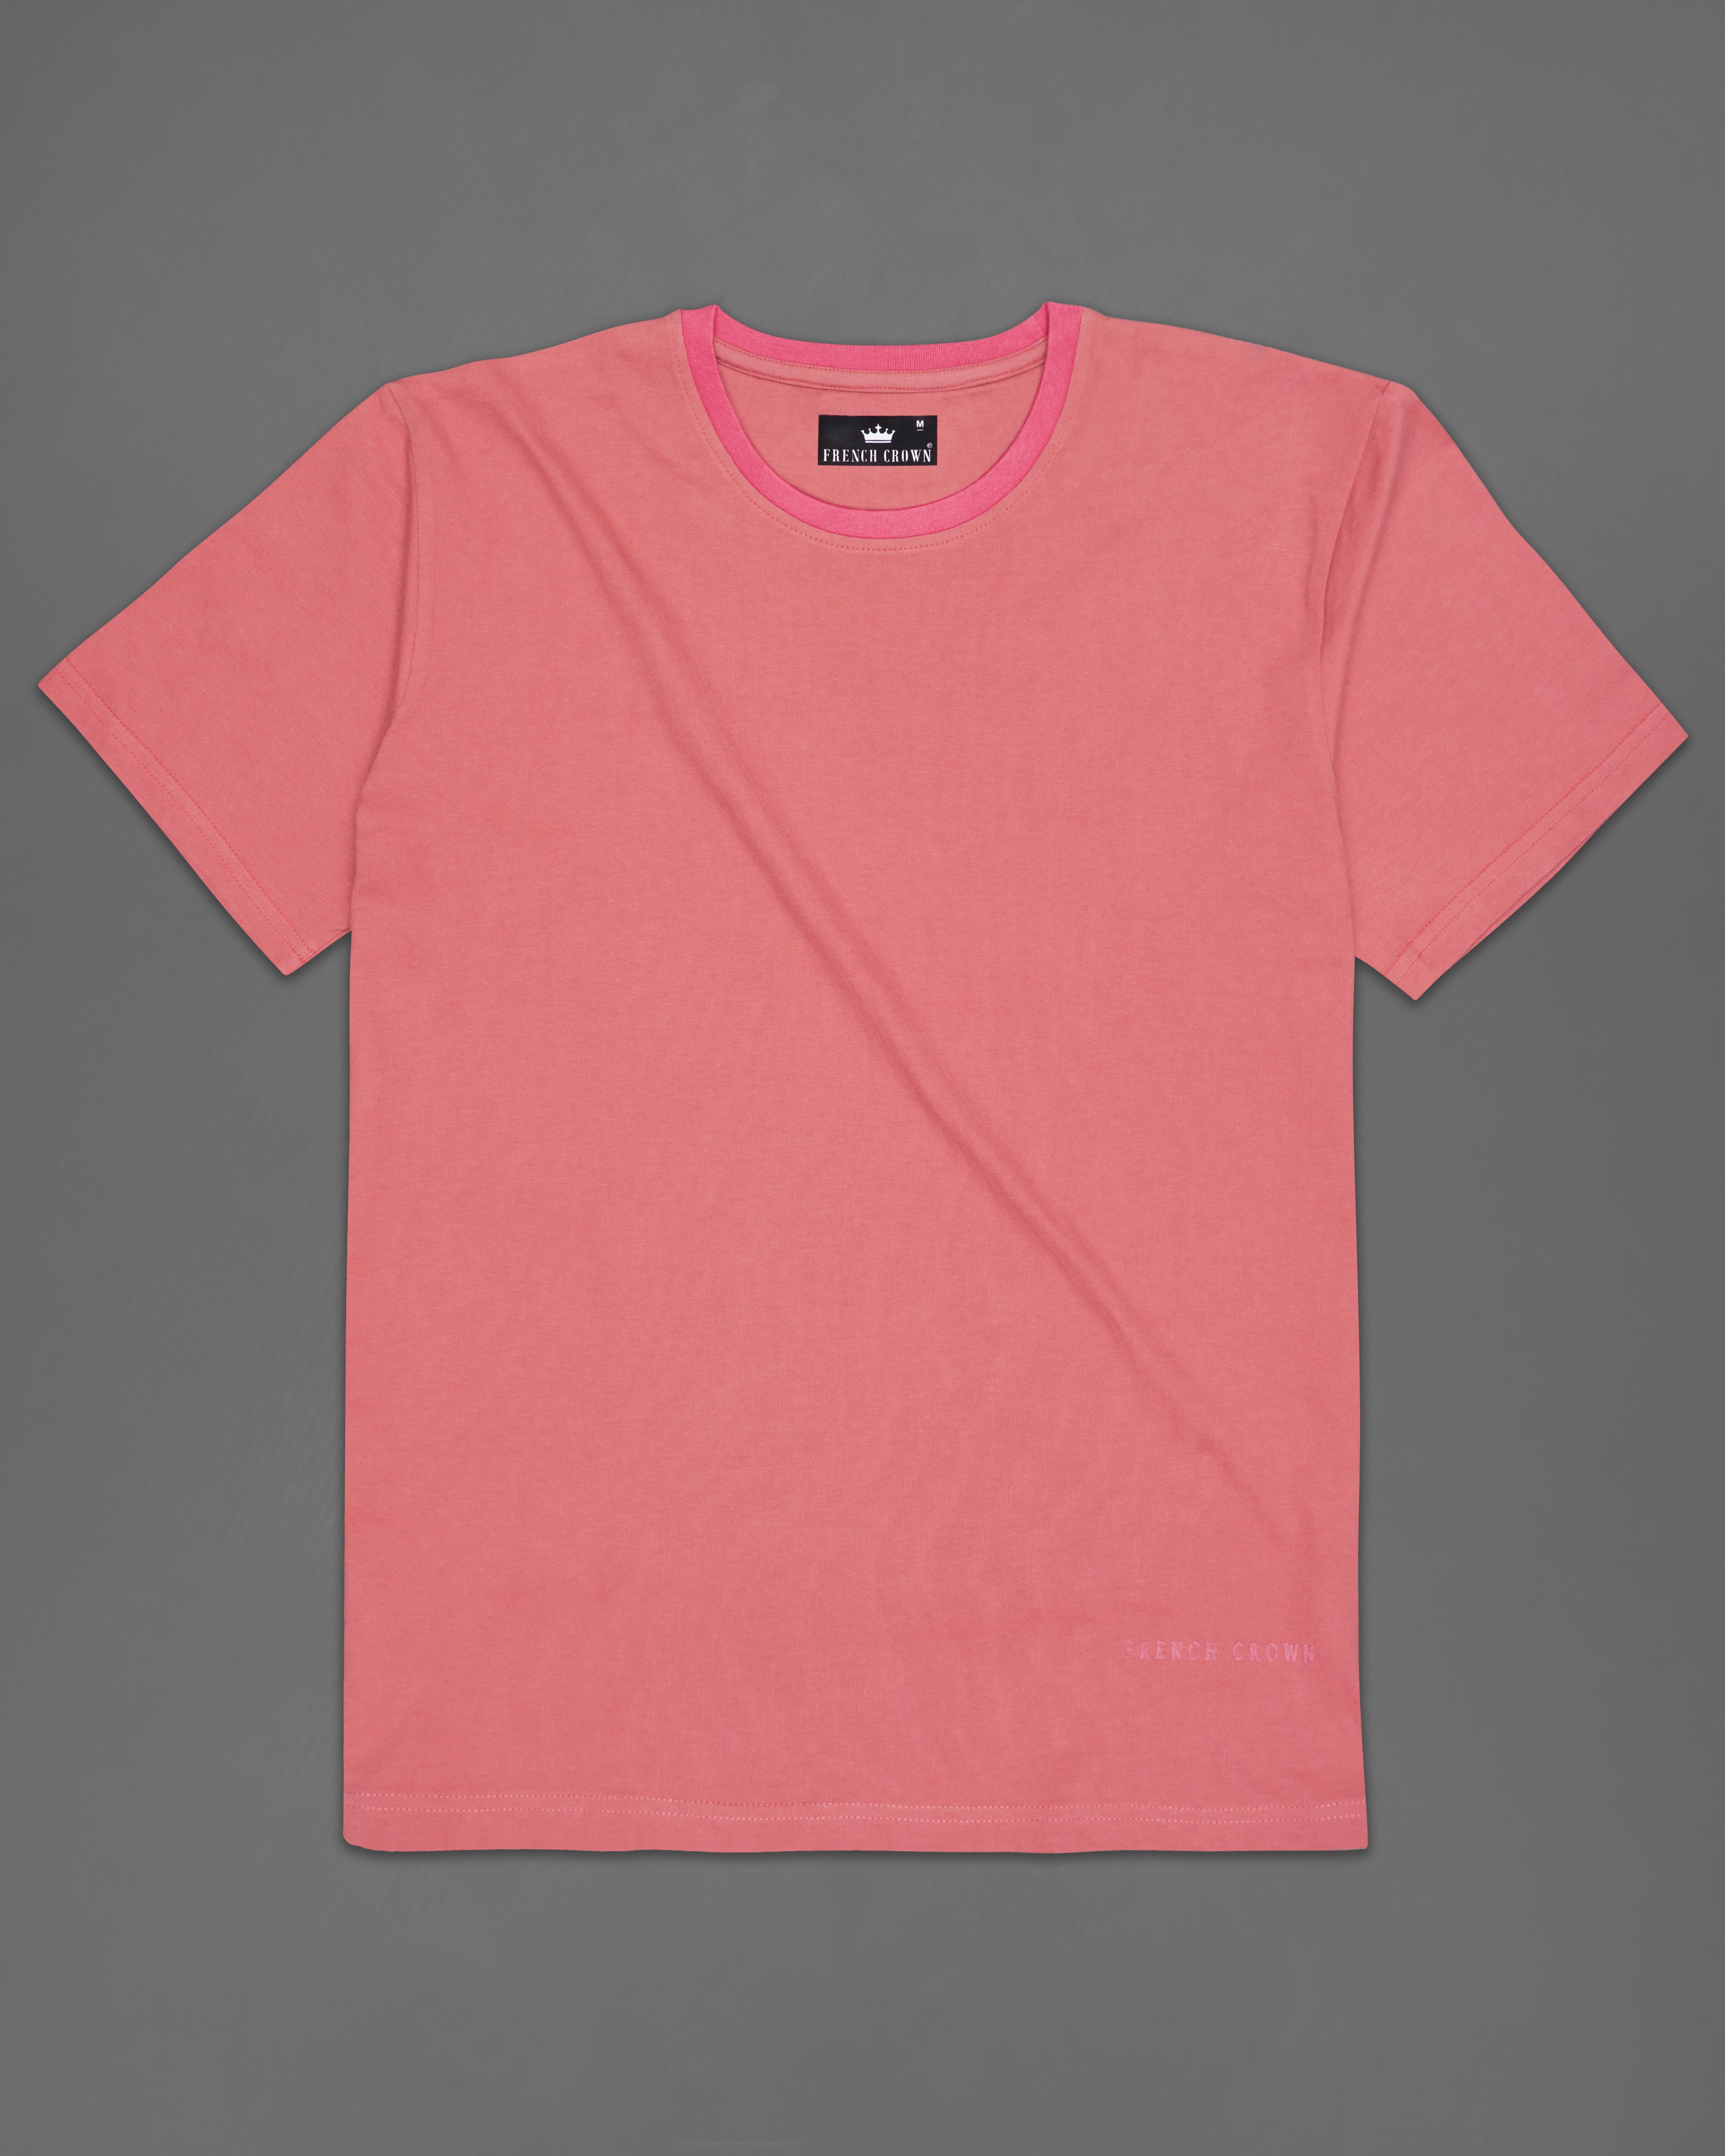 Carmine Pink Super Soft Premium Cotton Round Neck T-Shirt TS777-S, TS777-M, TS777-L, TS777-XL, TS777-XXL